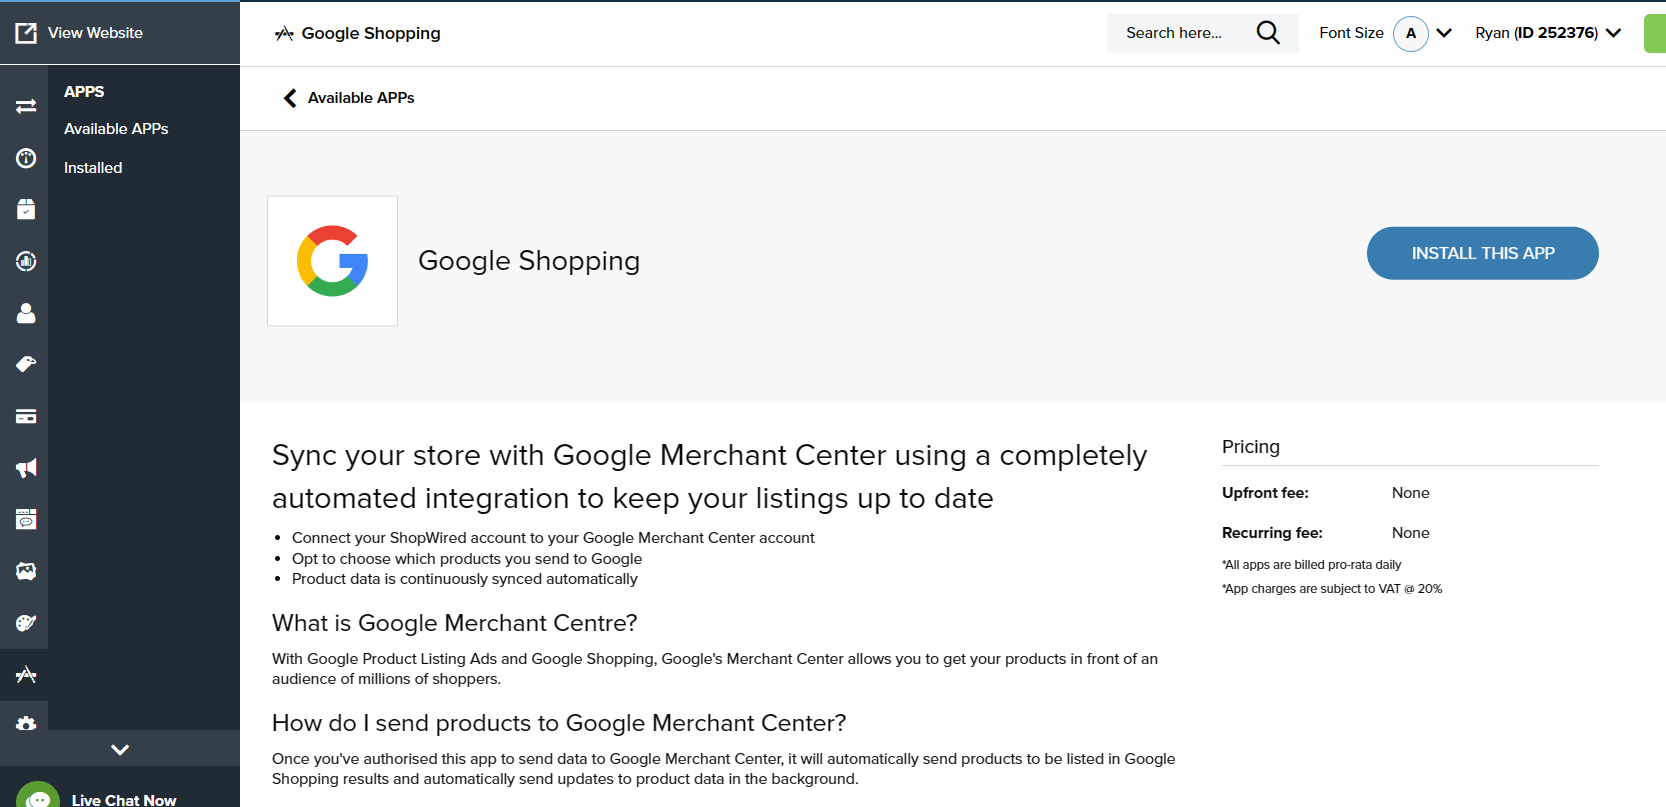 Google Shopping ShopWired App